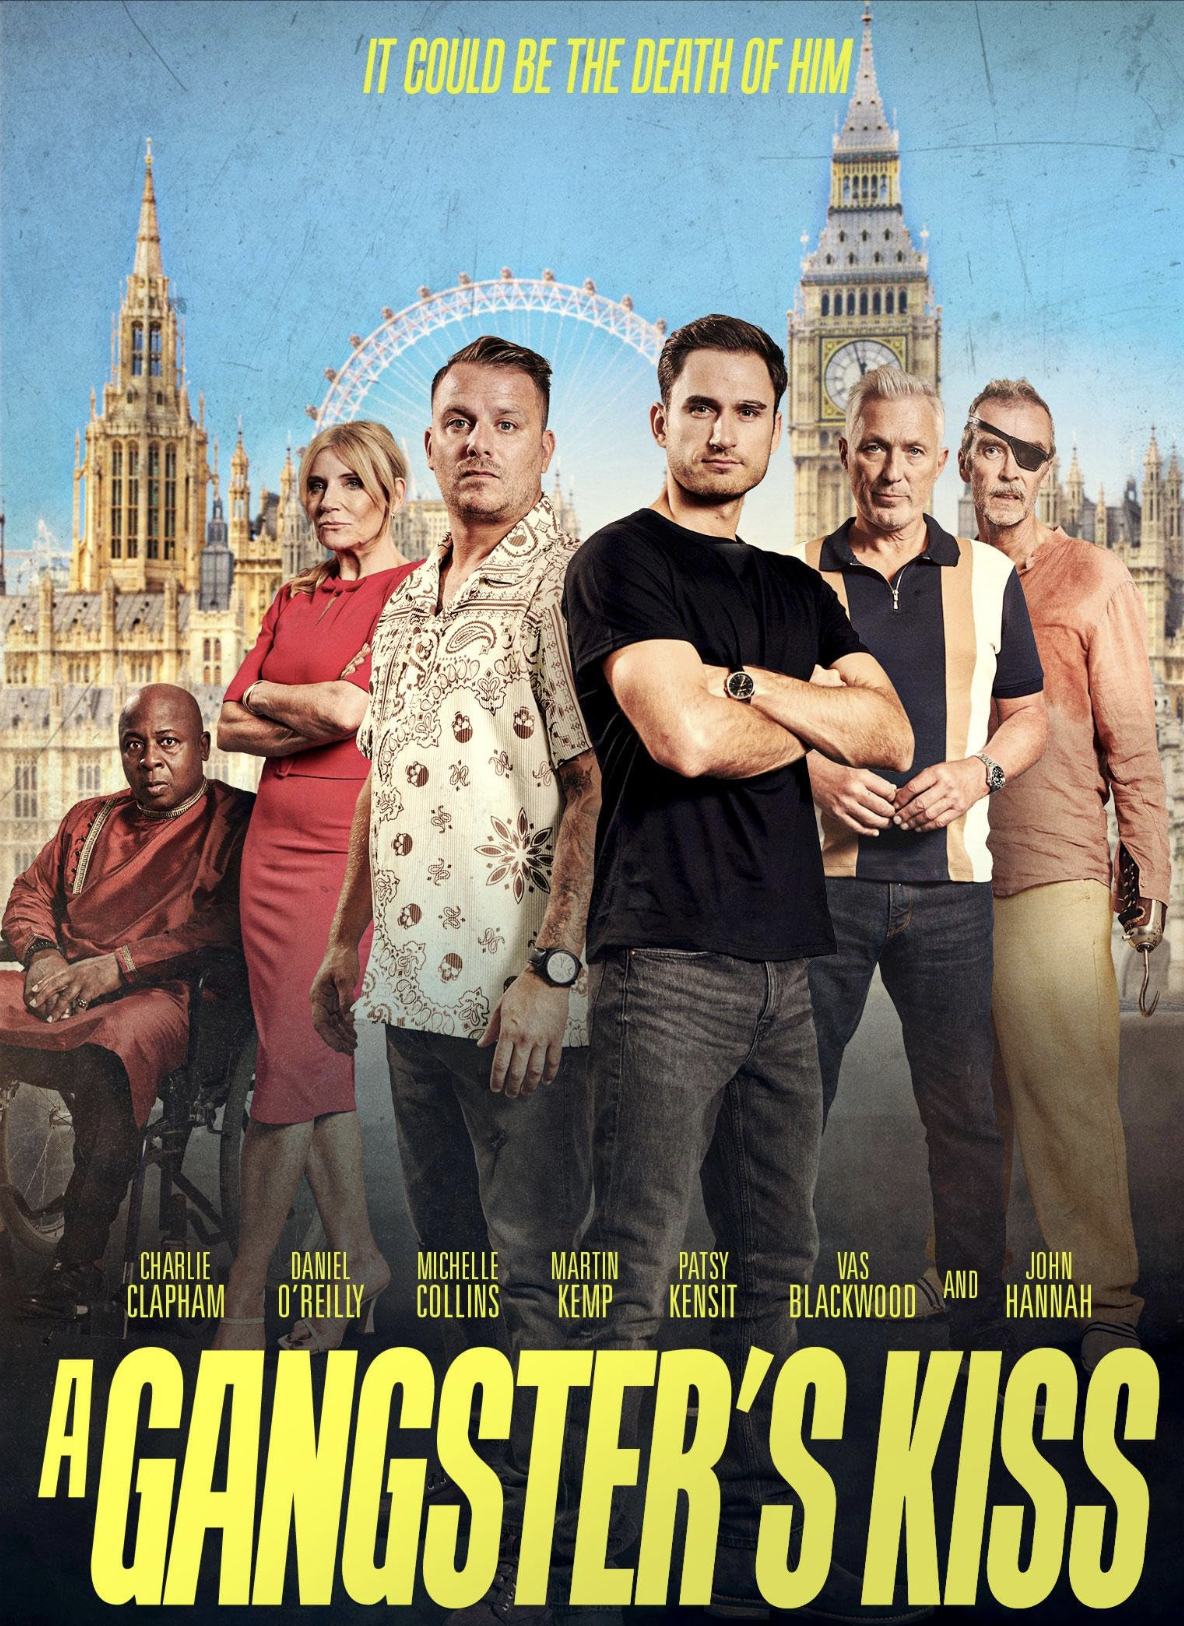 A Gangsters Kiss – UK Premiere